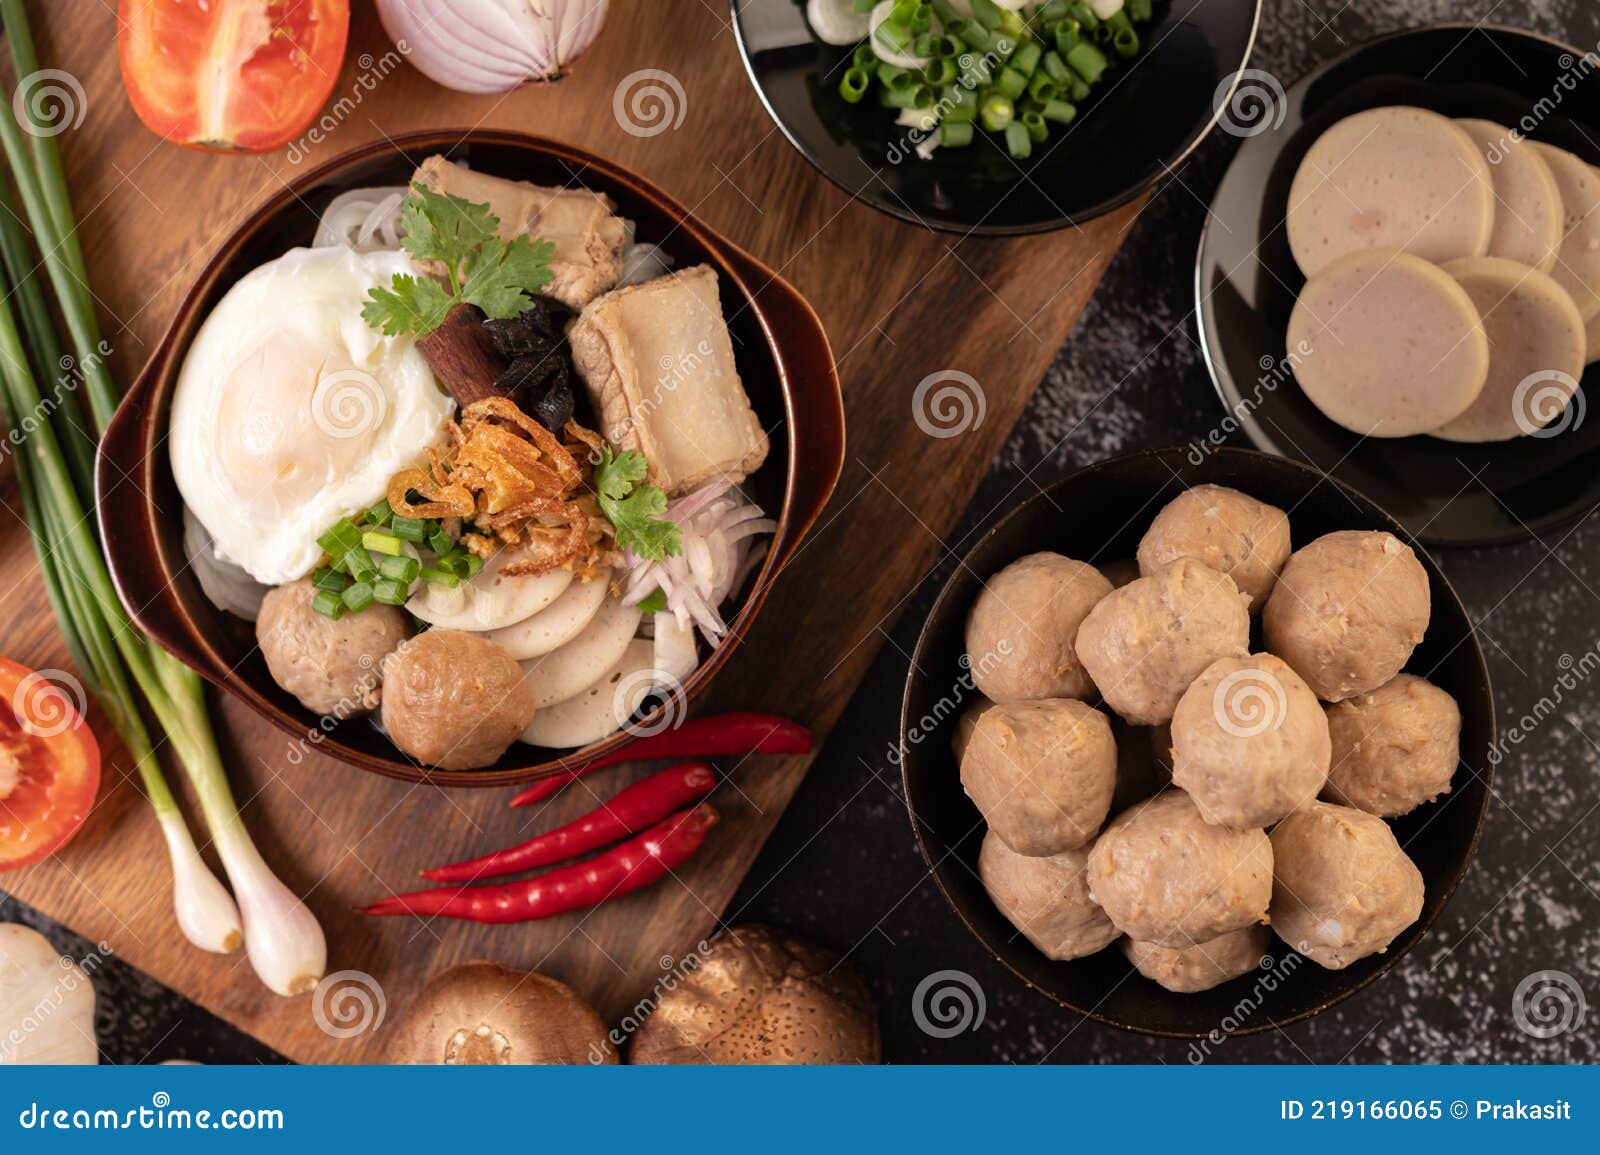 guay jap, meatballs, vietnamese pork sausage and a fried egg, thai food